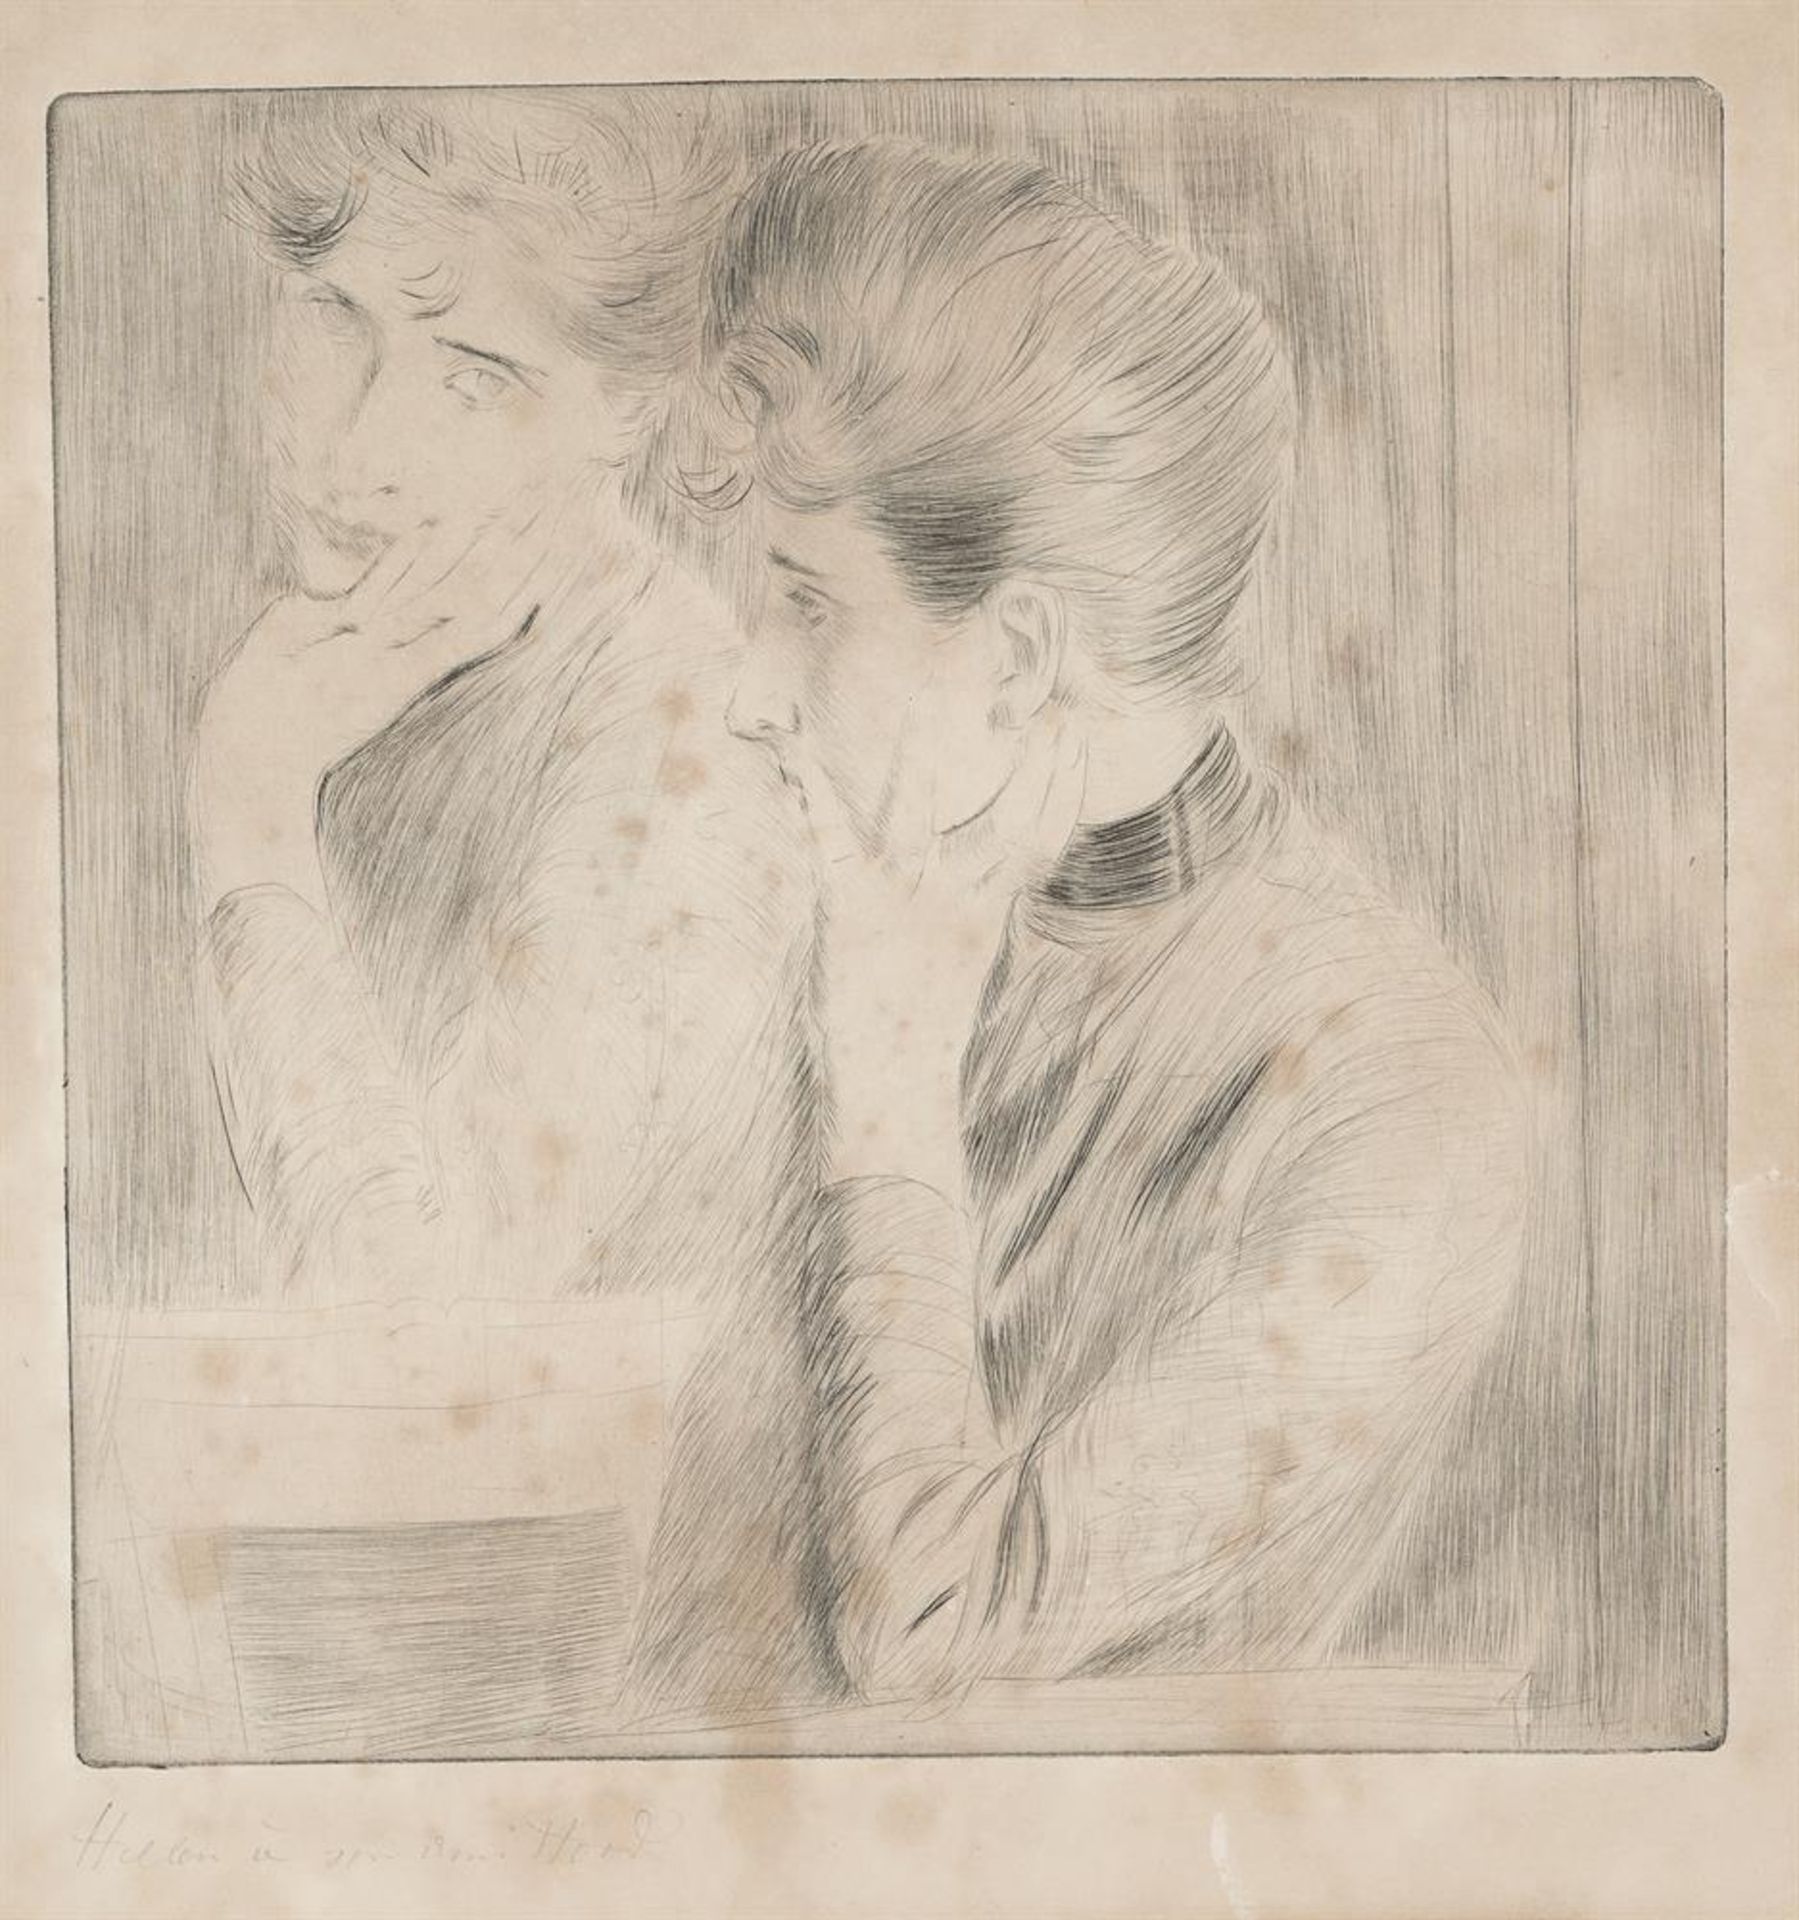 PAUL-CESAR HELLEU (FRENCH 1859-1927), 'DEVANT LE MIROIR' AND 'JEUNE FEMME ALLONGEE'